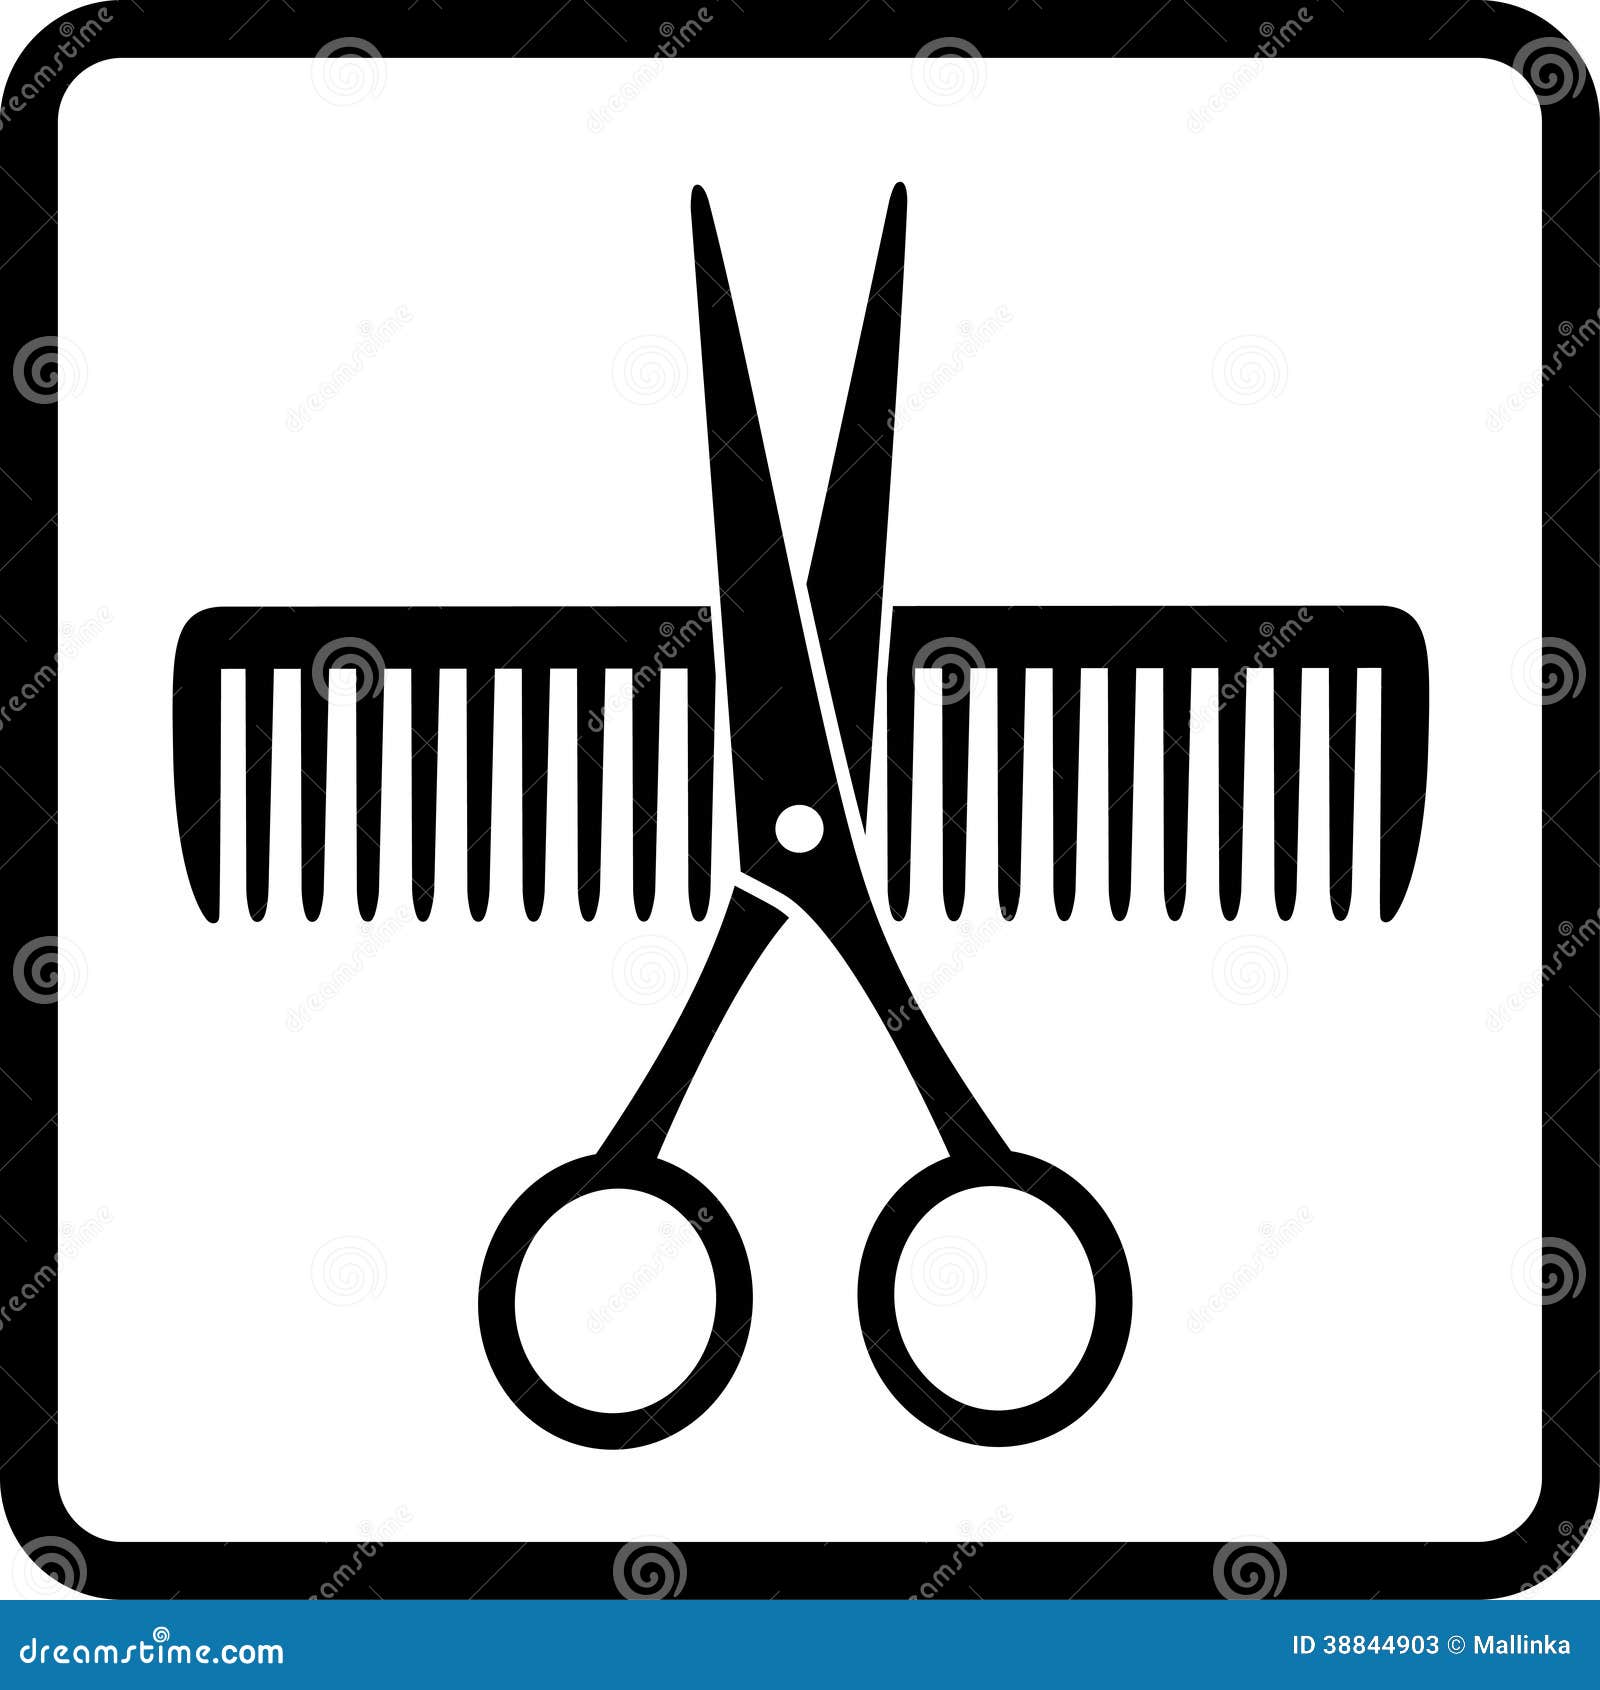 Scissors and comb stock vector. Illustration of scissor - 38844903